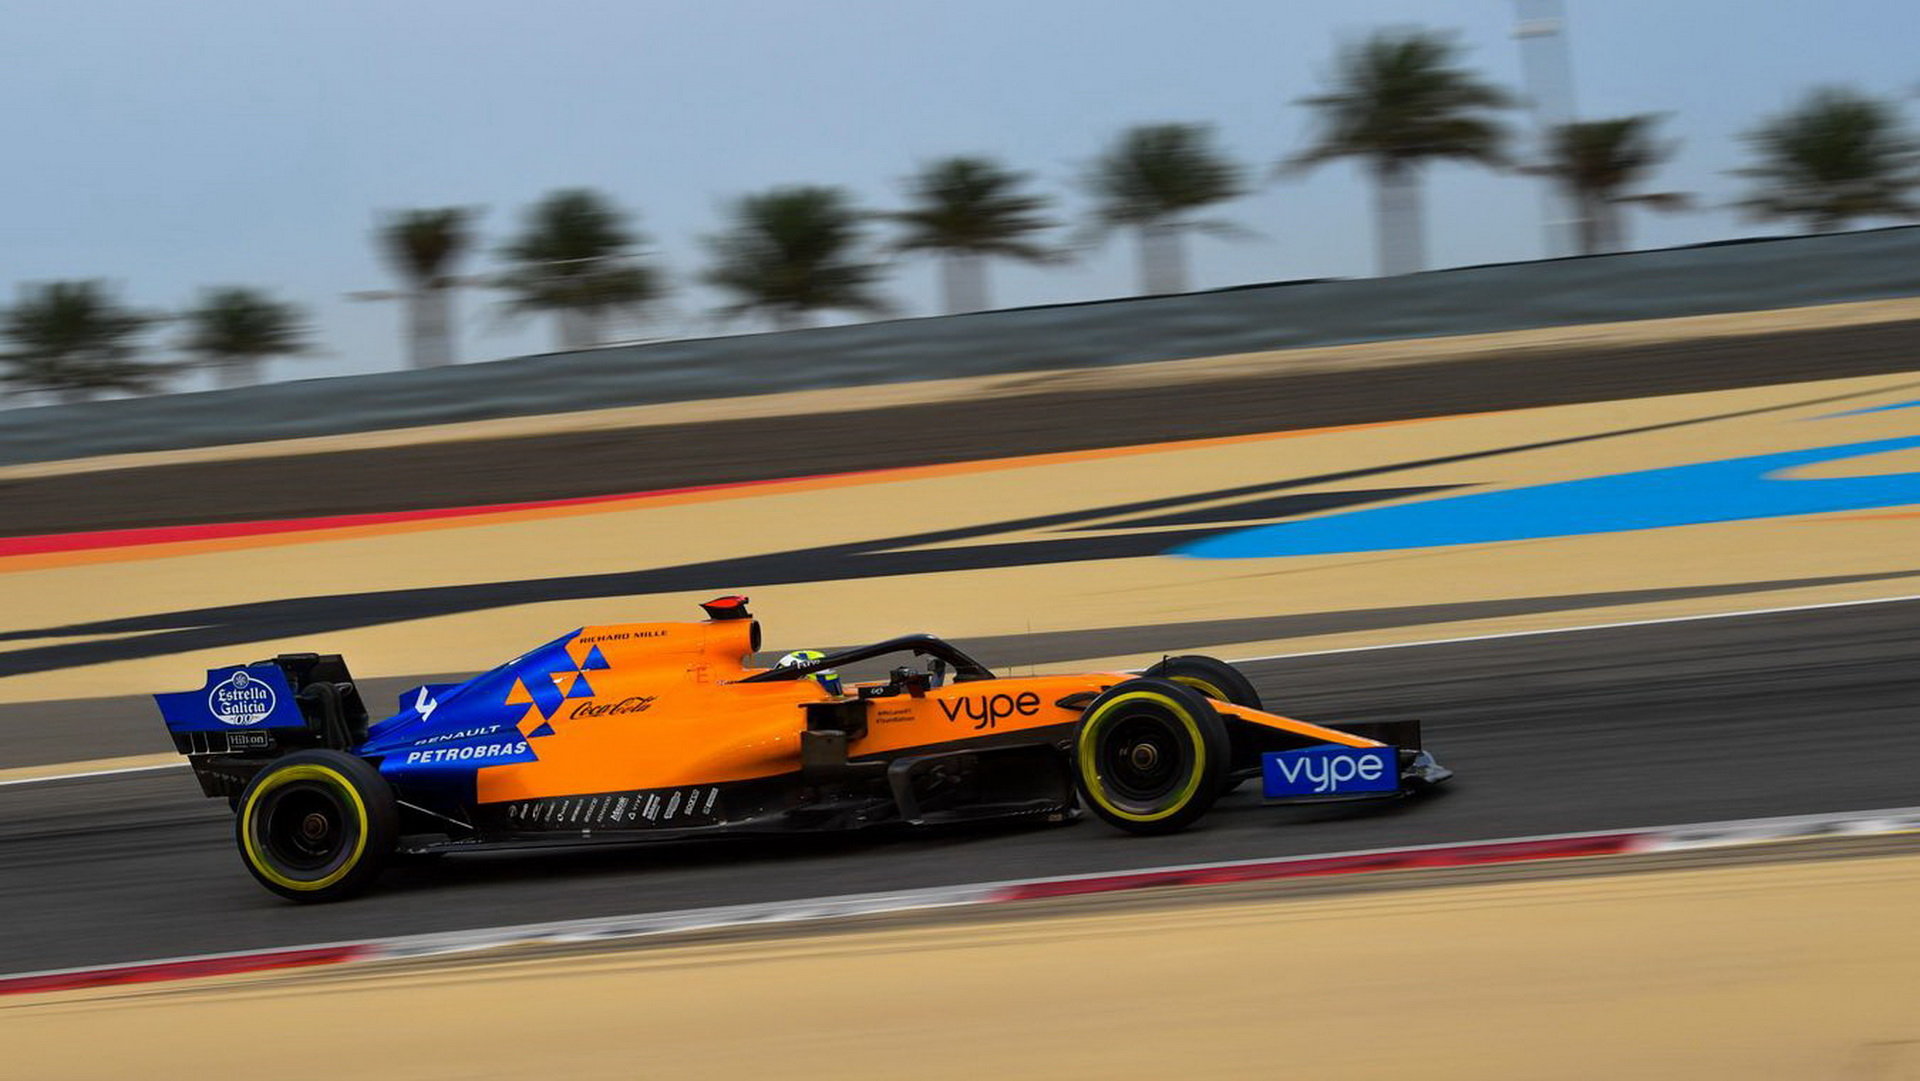 Nováček Lando Norris pro McLaren v Bahrajnu vybojoval cenných 8 bodů